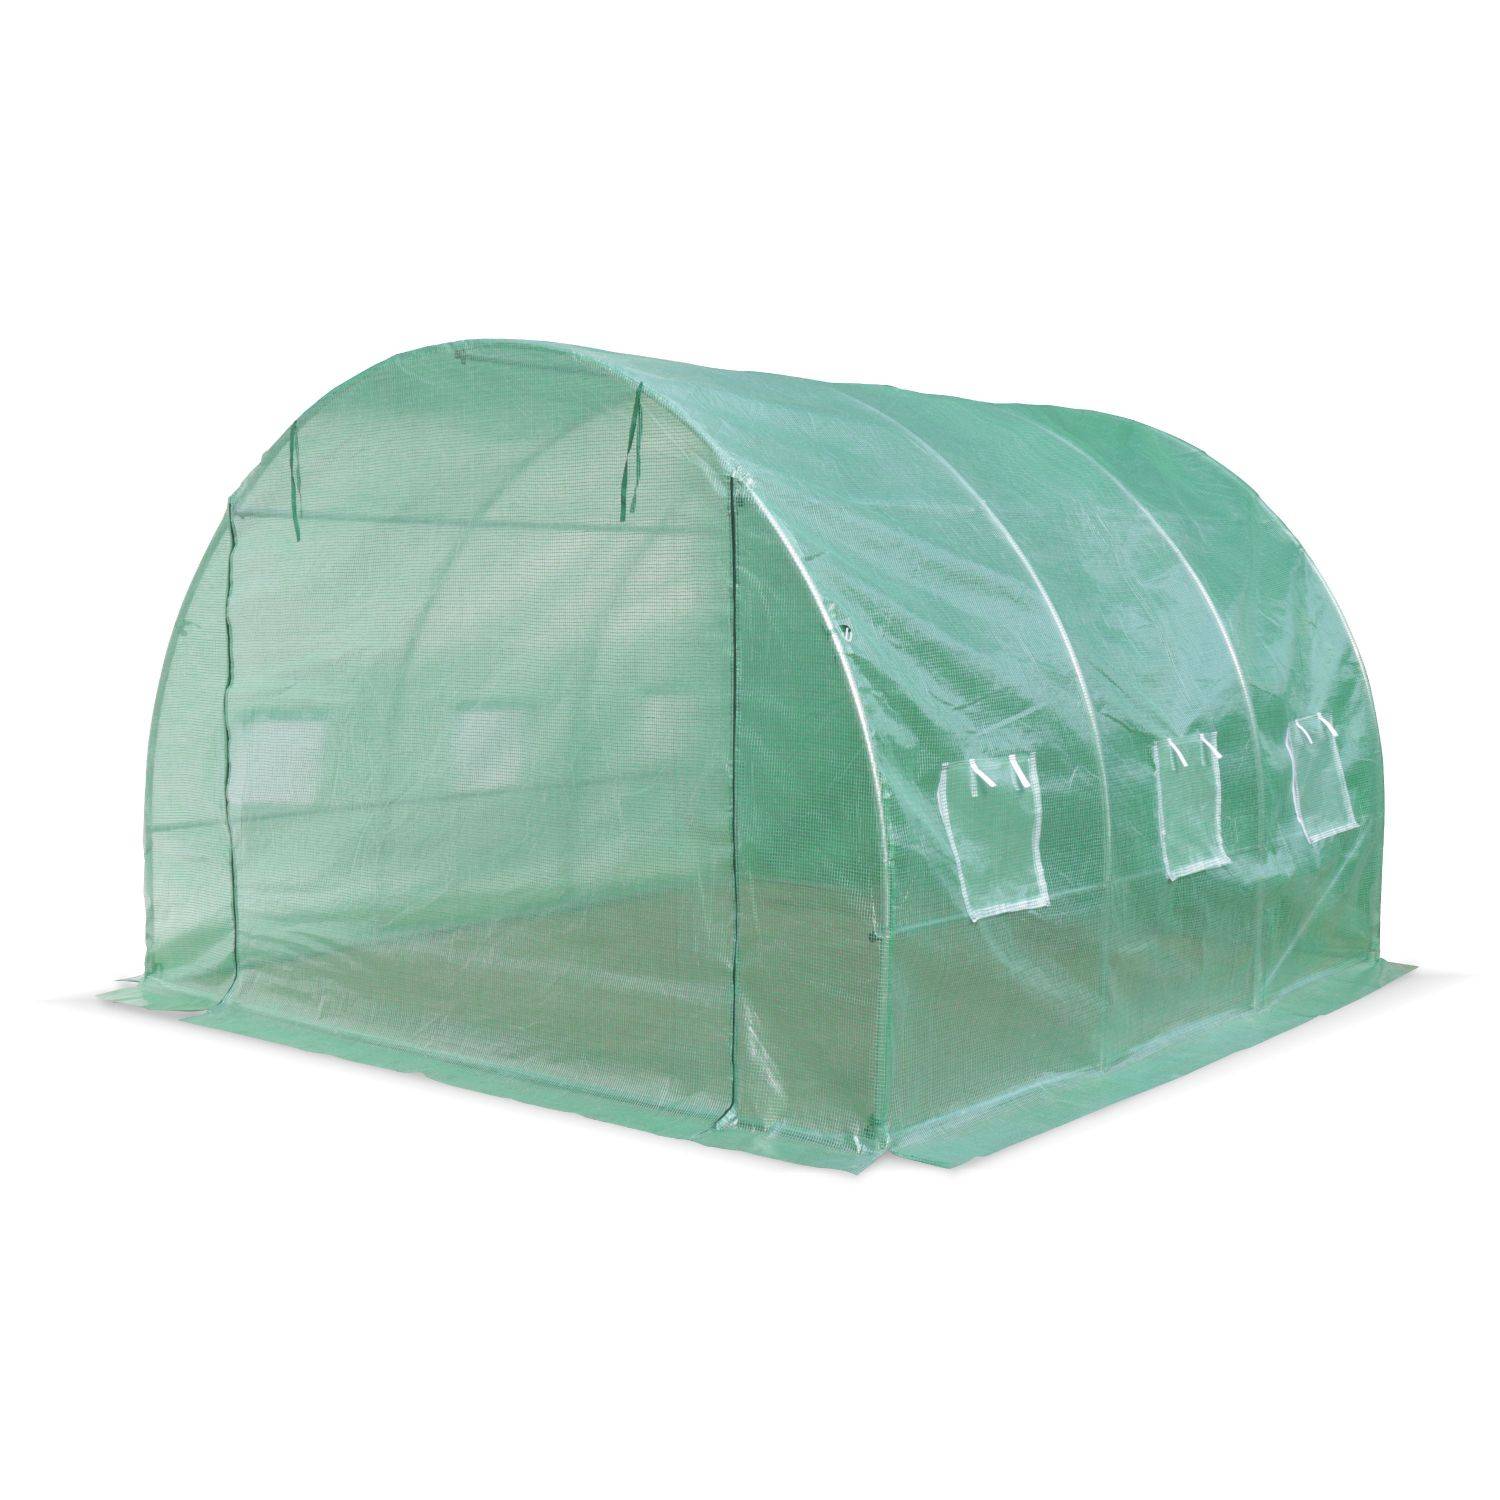 9m² polyethylene tunnel greenhouse - 297x295x196cm - Thym - Green,sweeek,Photo2